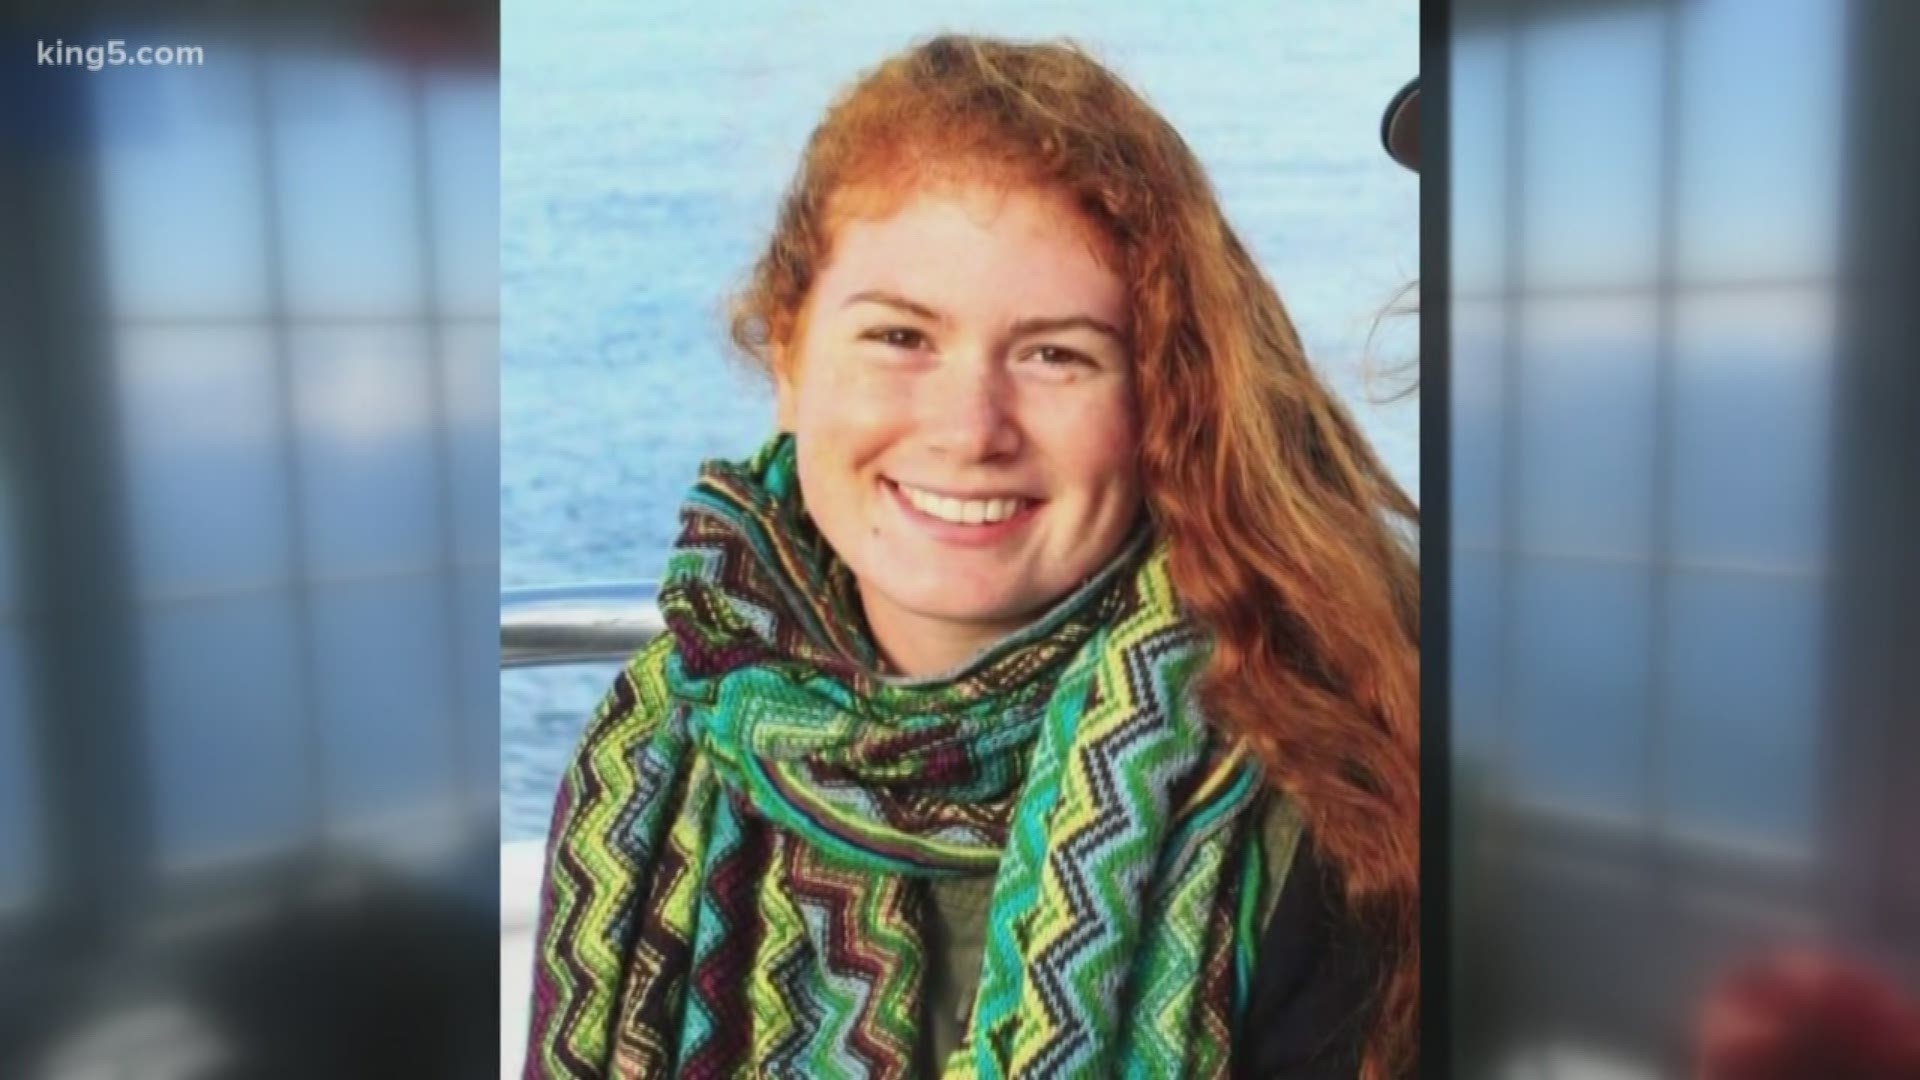 Rachel Lakoduk, 28, left for a hike at the Hidden Lake trailhead on Oct. 17. She hasn't been seen since.